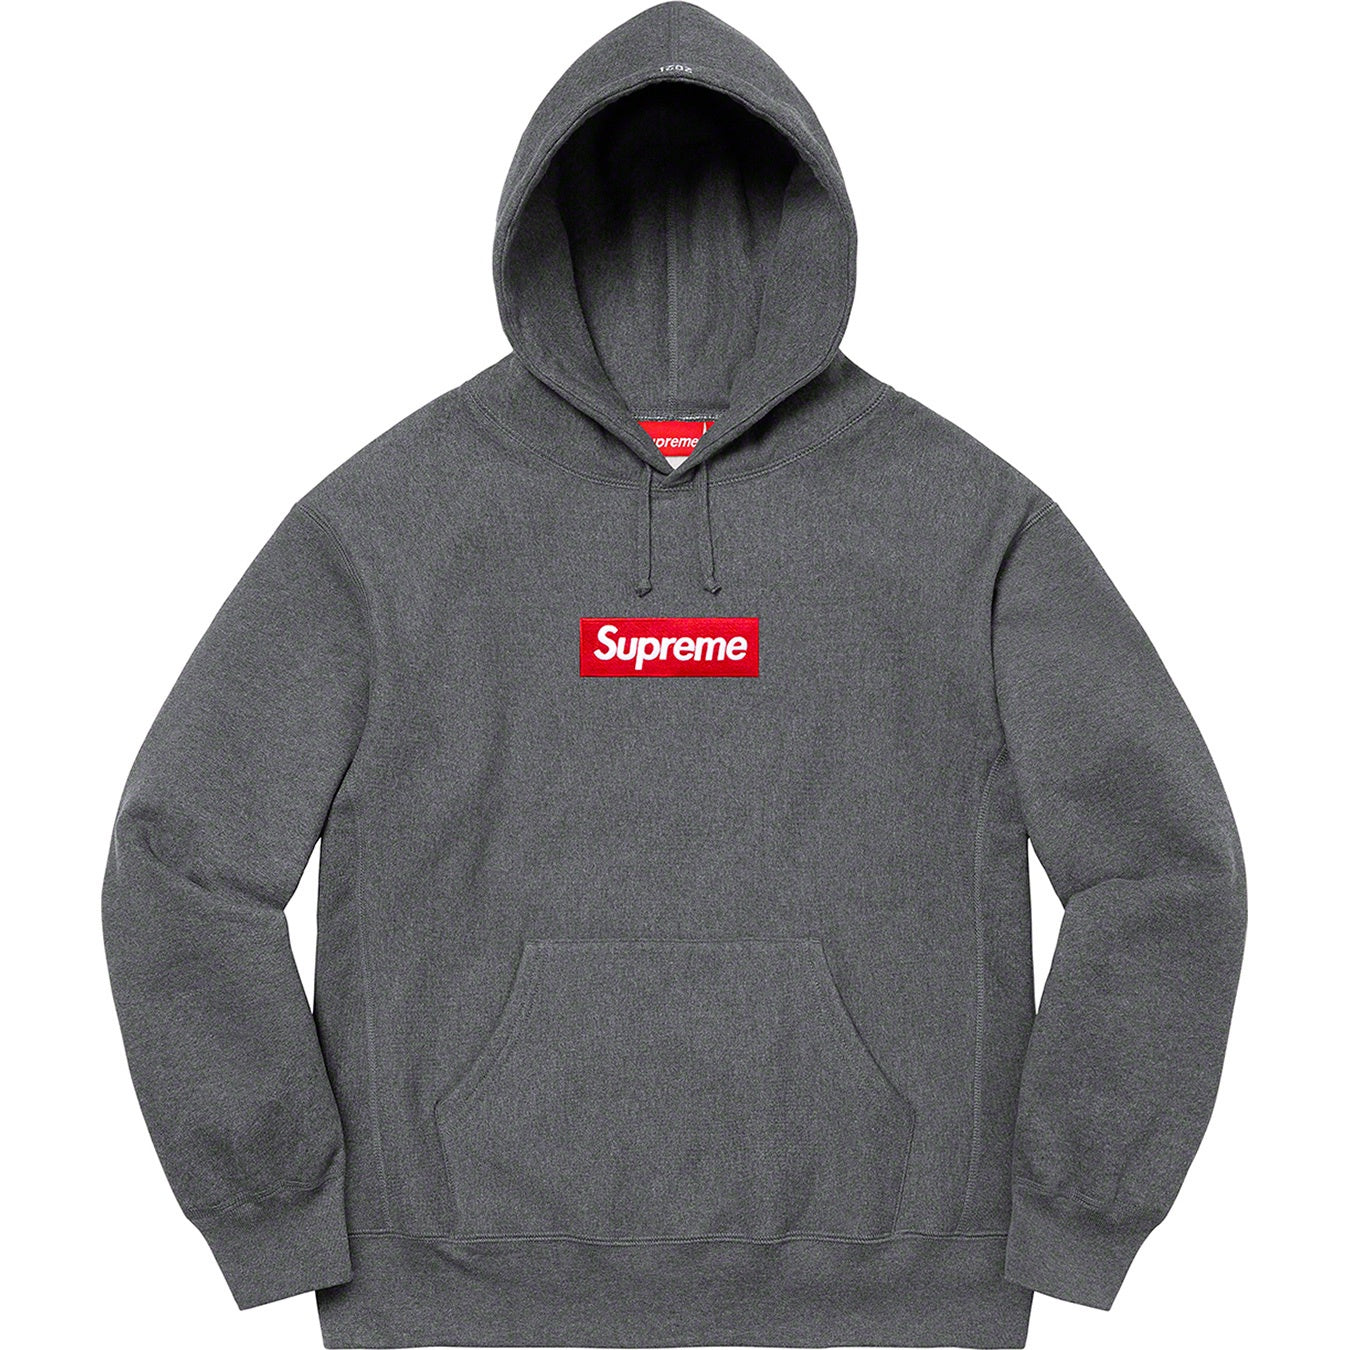 Supreme Box Logo Hooded Sweatshirt - Charcoal from Supreme